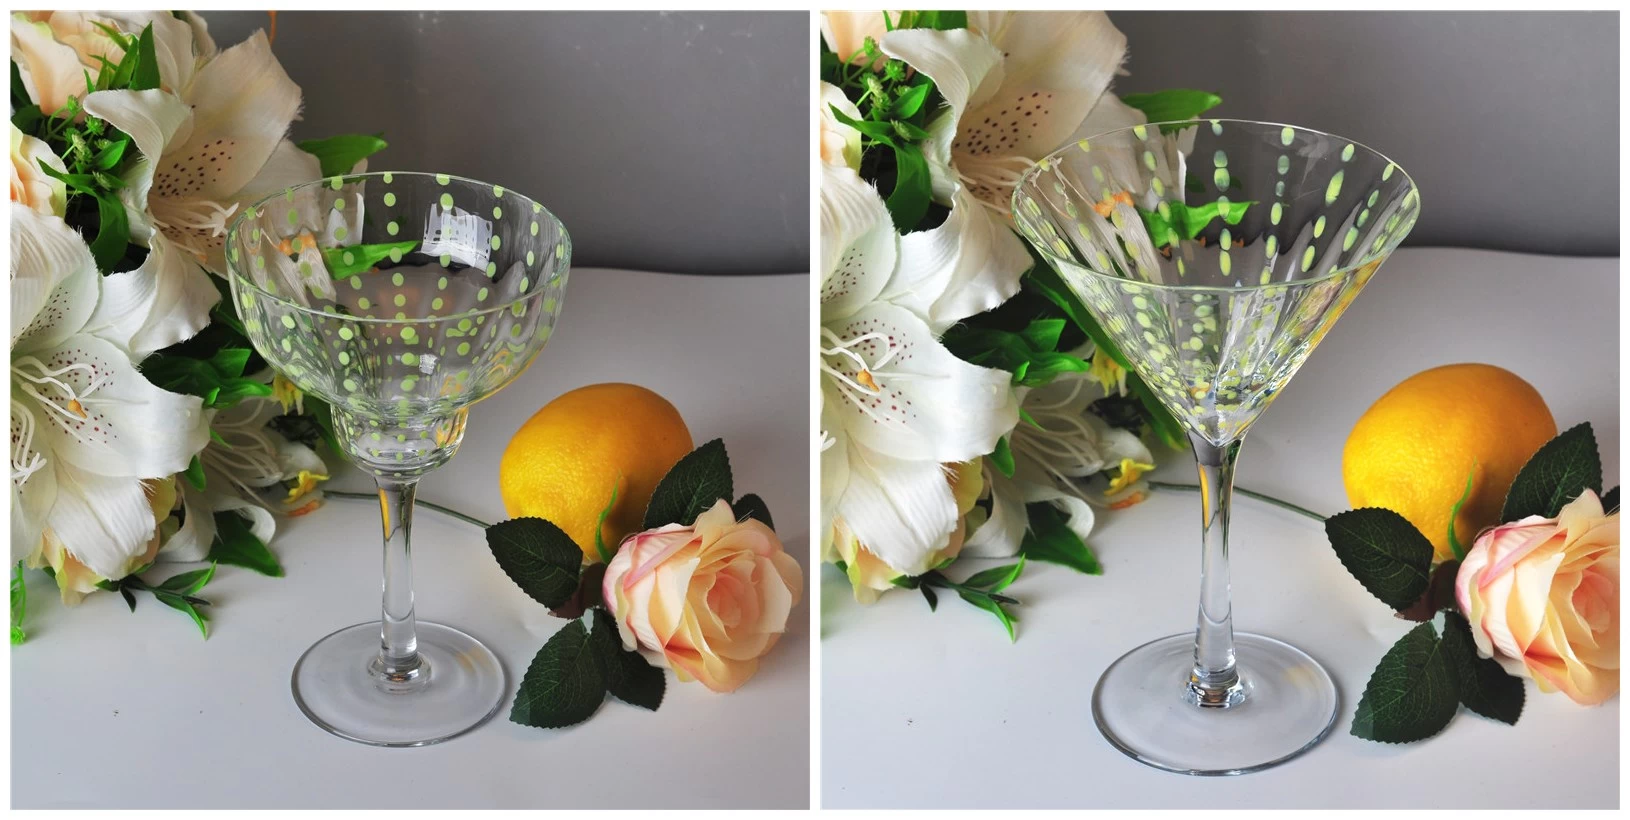 Colorful Martini Glass From Sunny Glassware